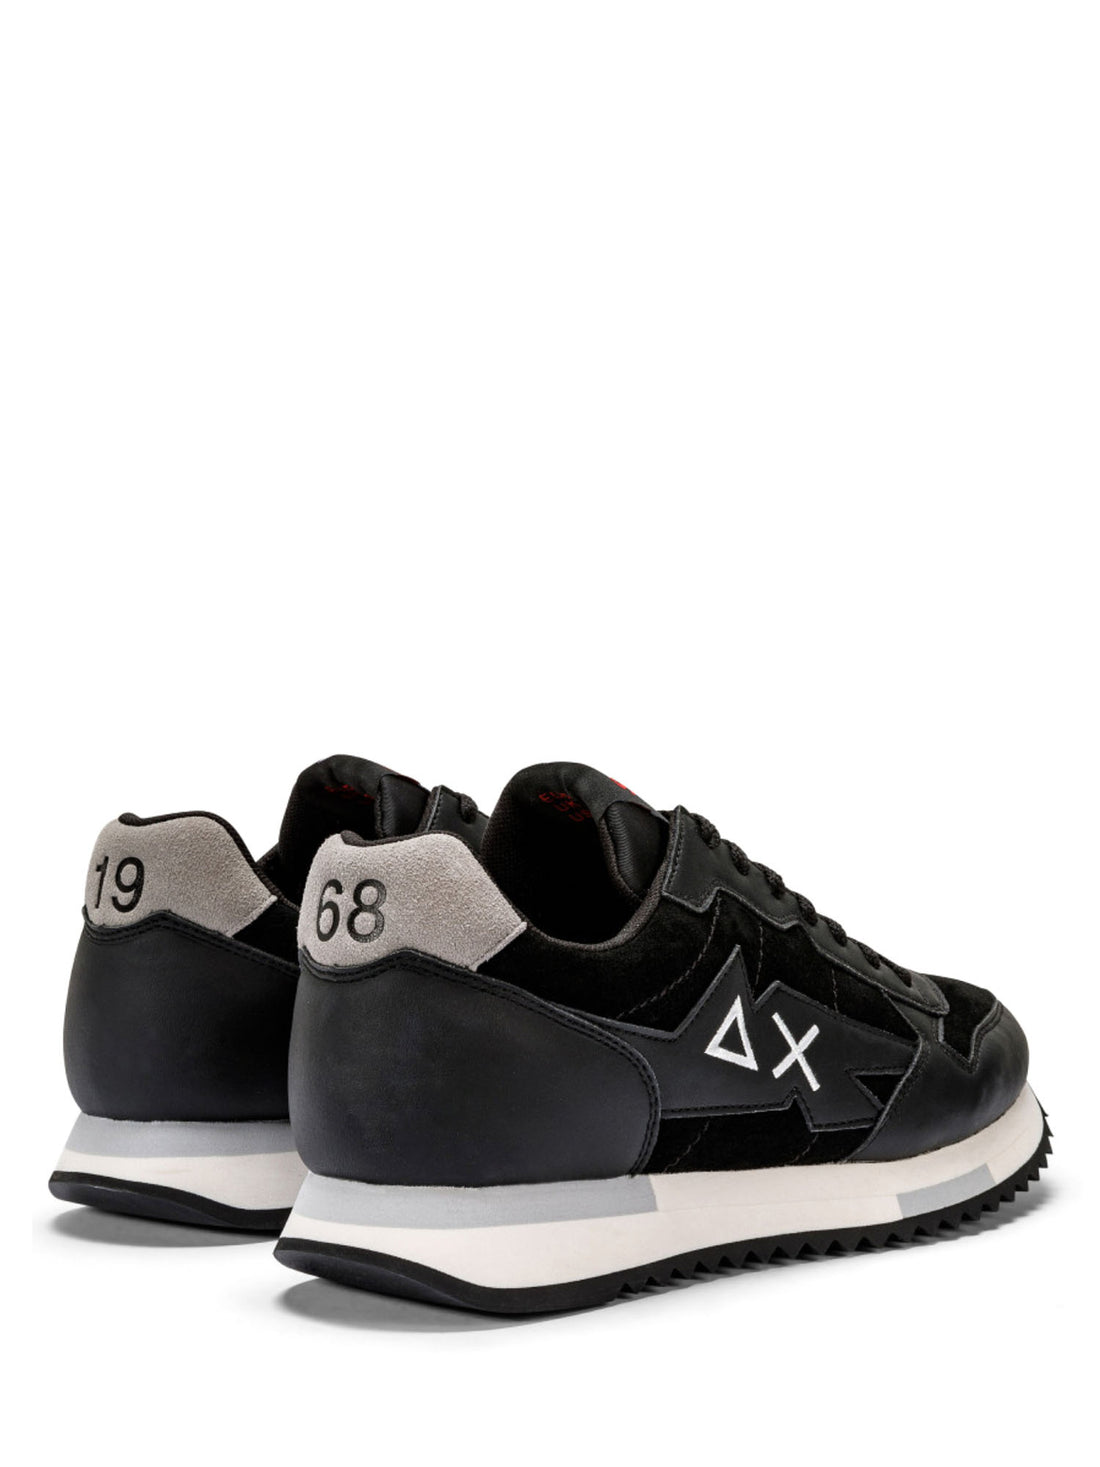 Sneakers Nero Sun68